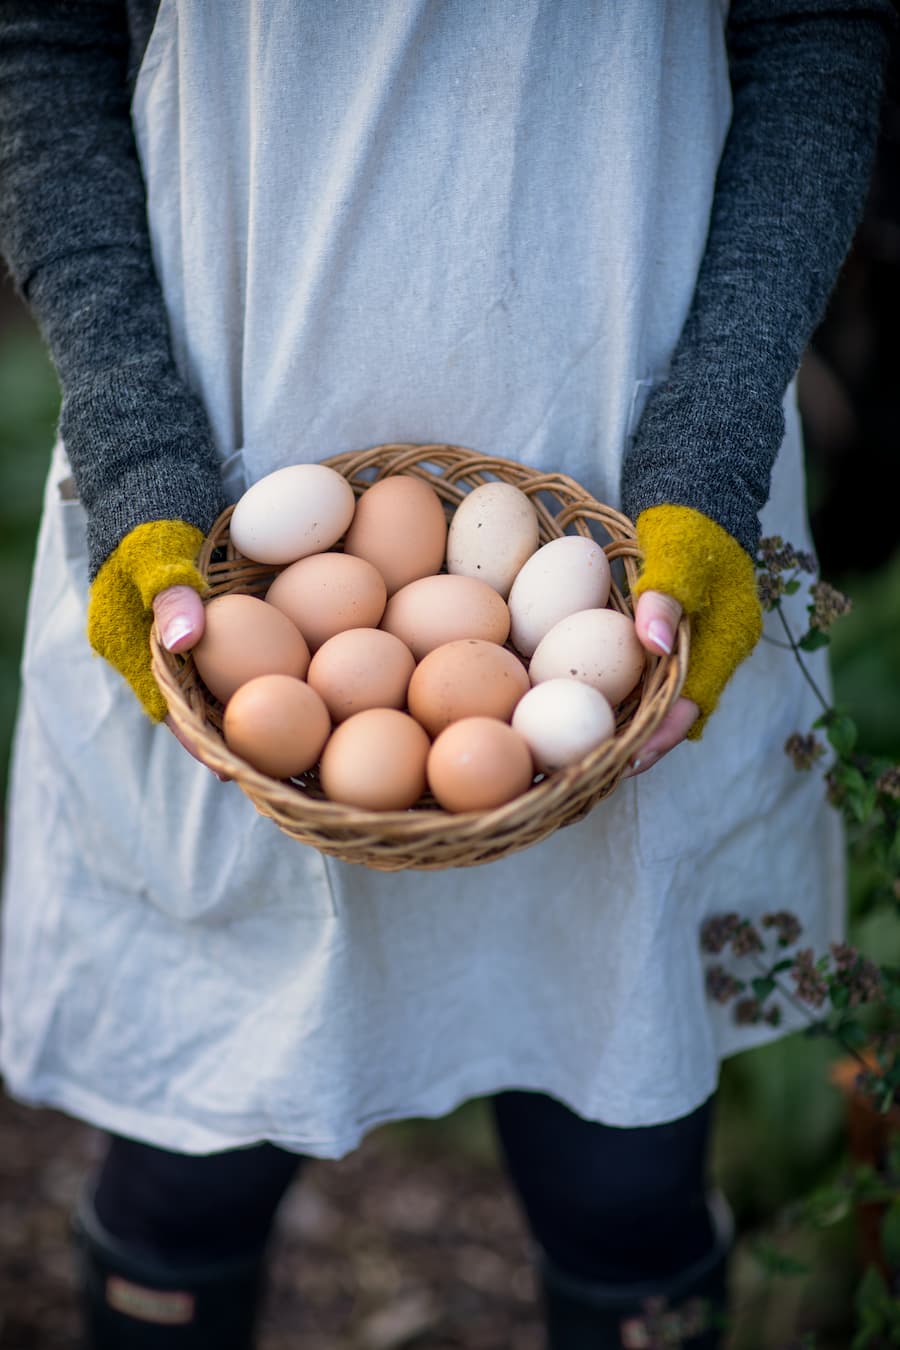 Woman holding a basket of freshly laid free range eggs